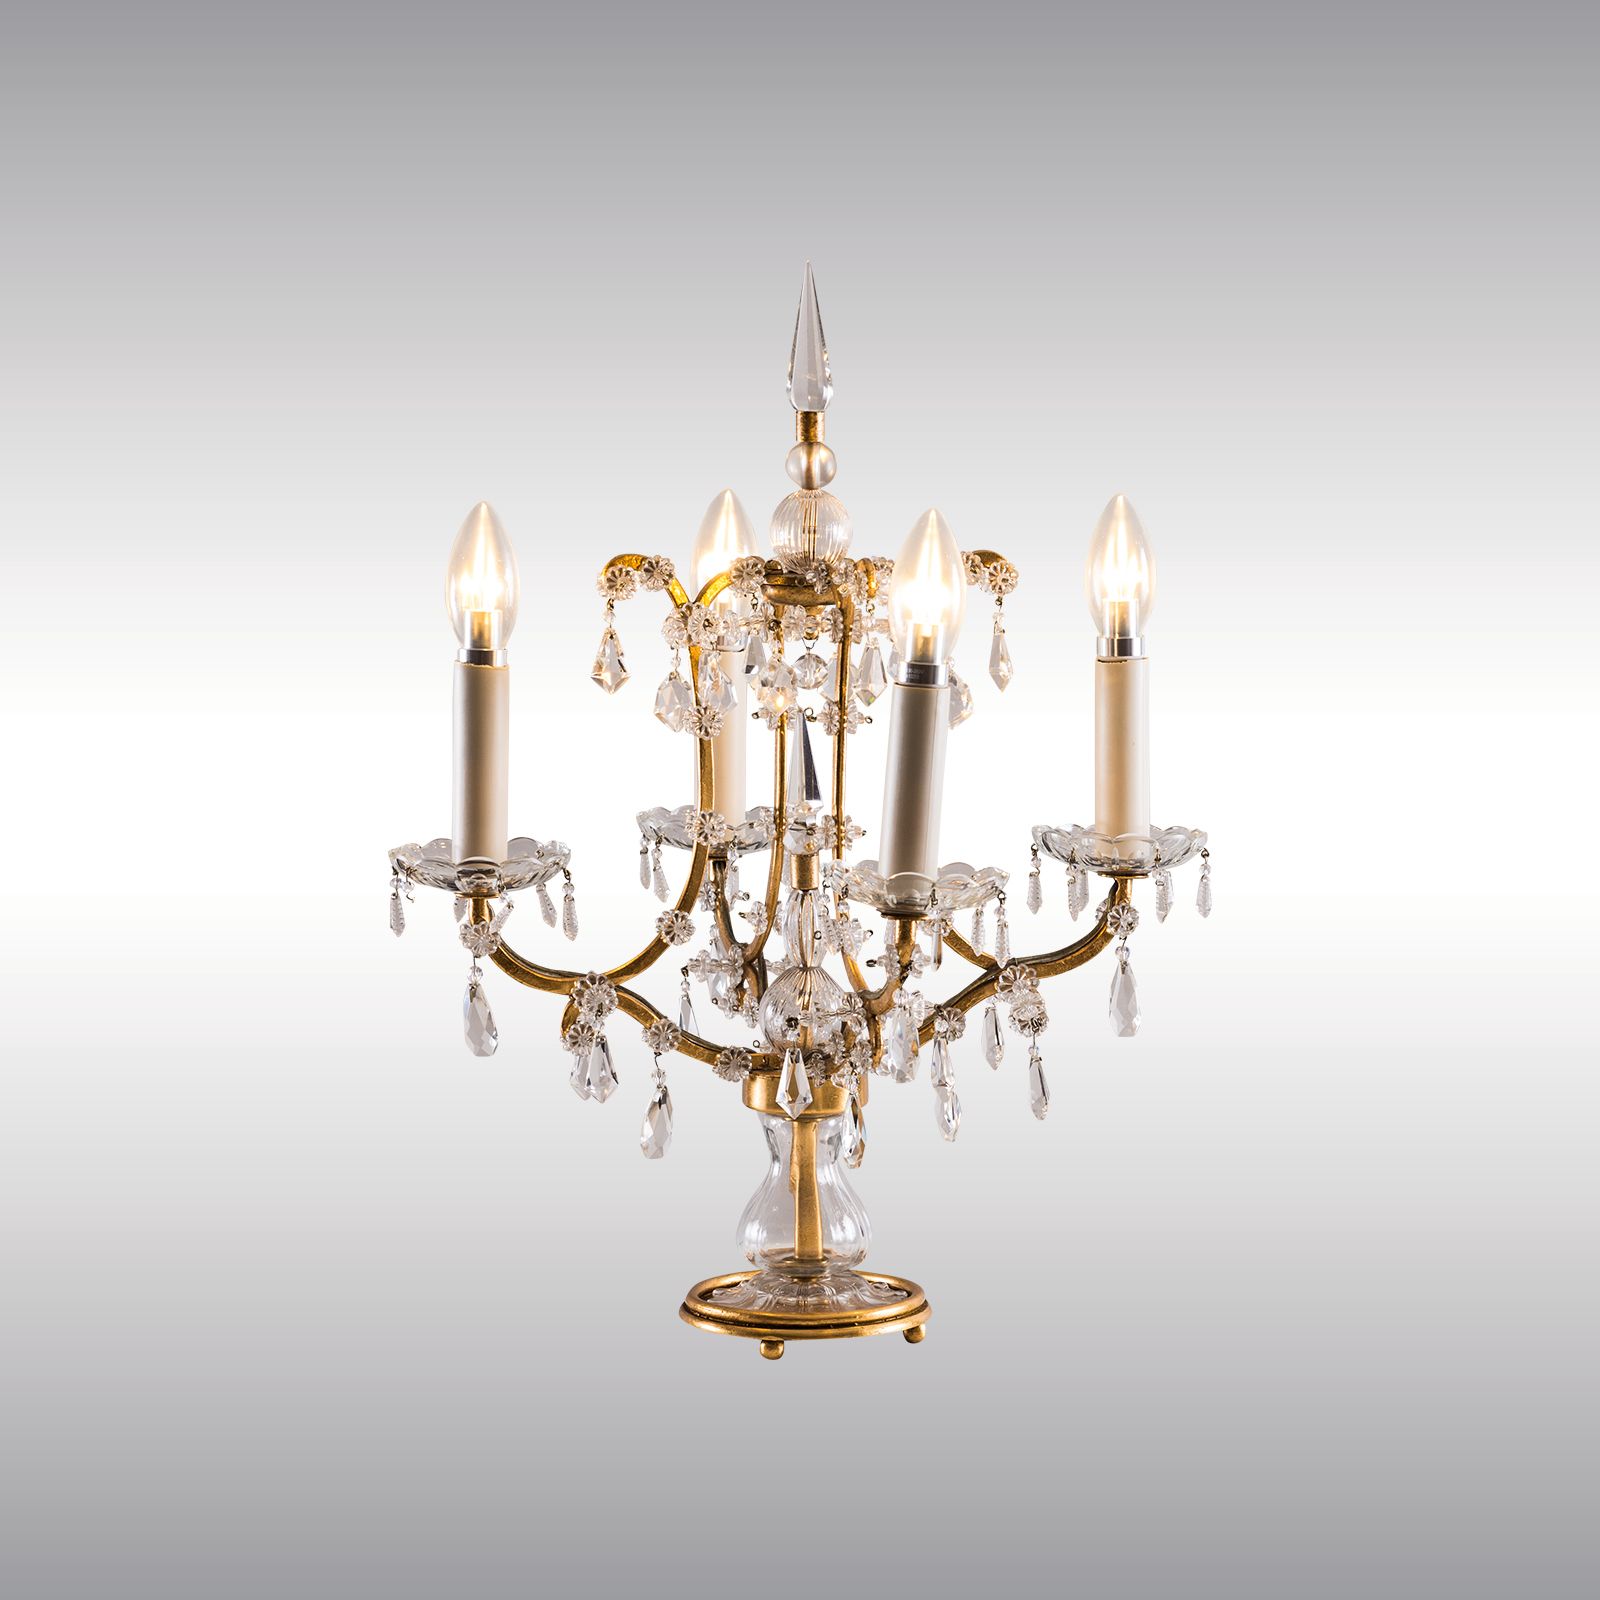 WOKA LAMPS VIENNA - OrderNr.: 80025|Maria Theresien Table-Lamp - Design: WOKA